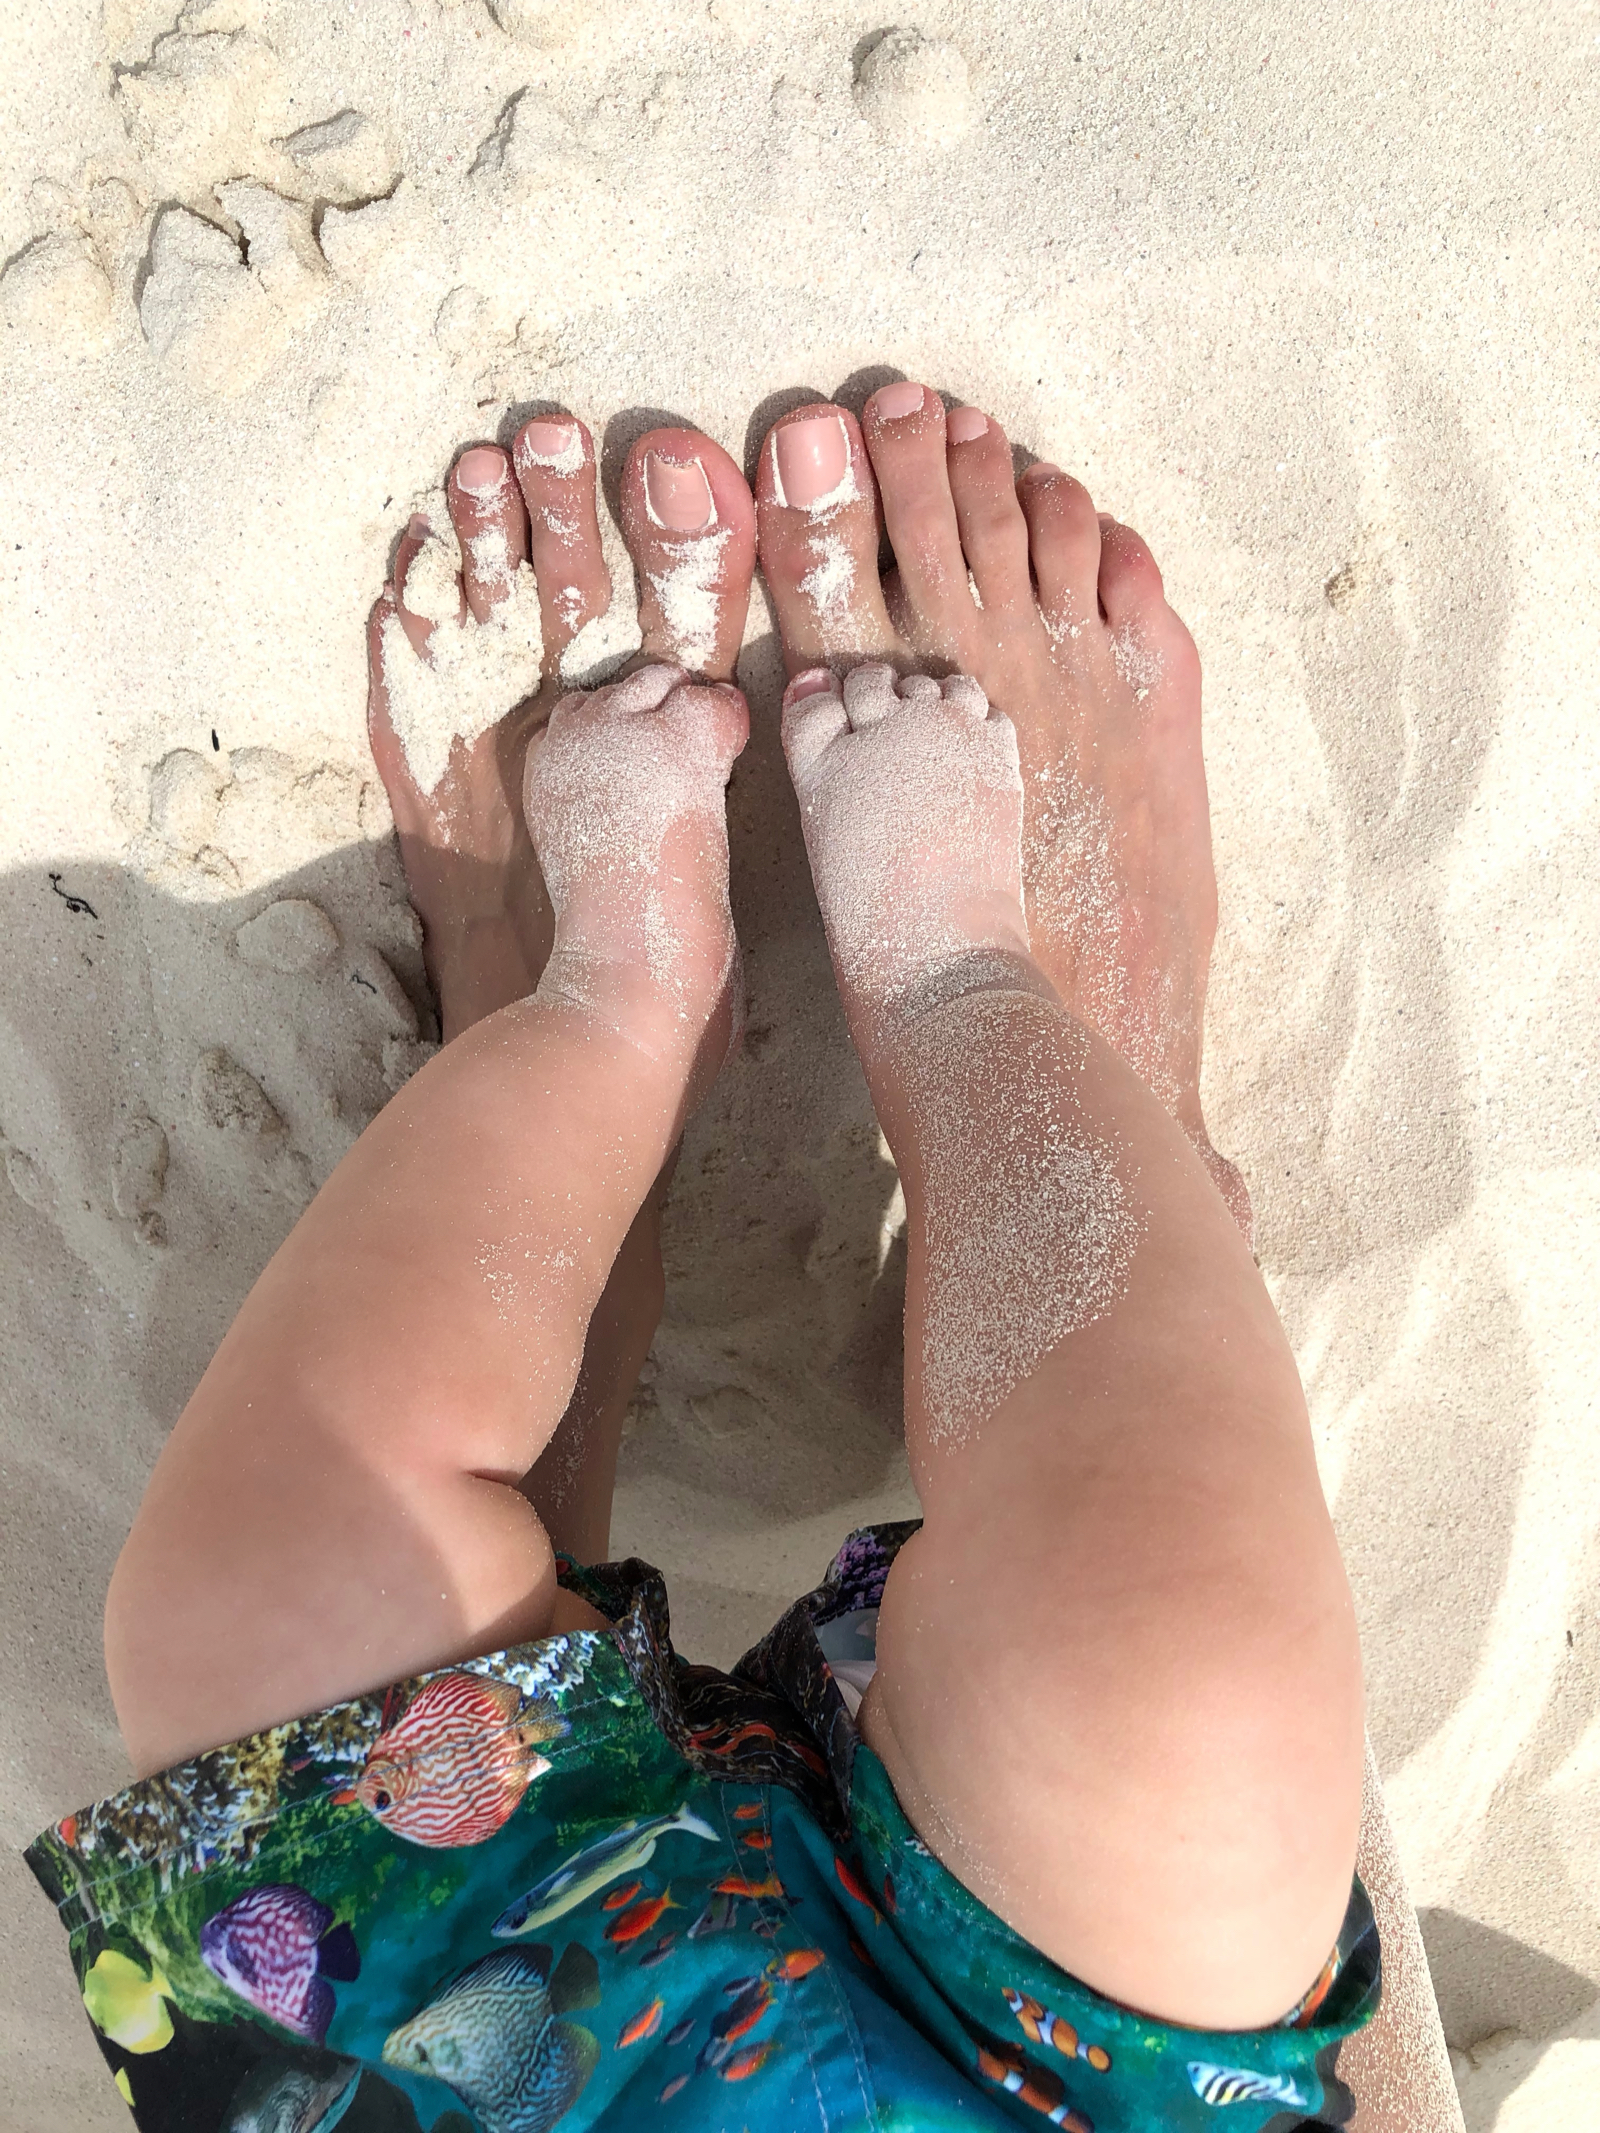 sandy feet